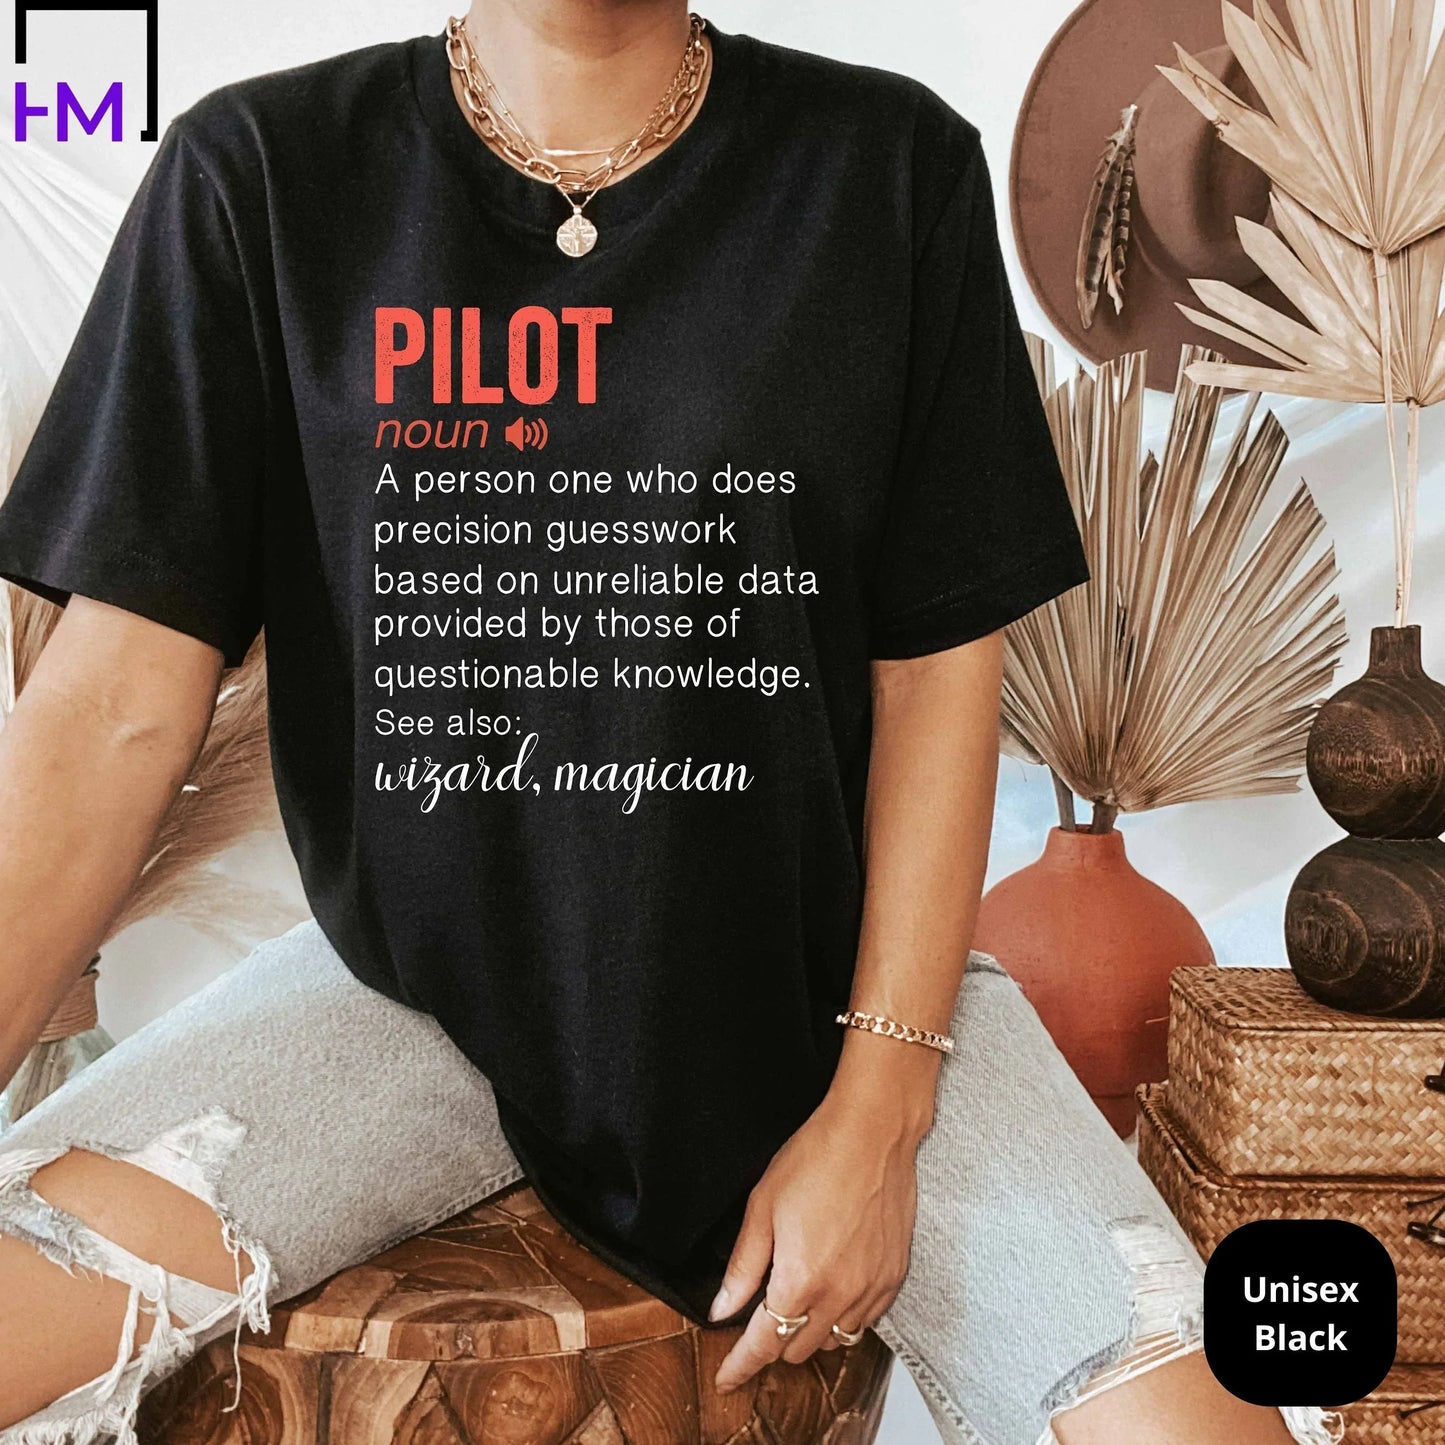 Funny Pilot Shirt, Airplane Mode Shirt, Aviation Graduate Student, Pilot Gift for Traveler, Adventurer Gift, Frequent Flyer Vacation Tee